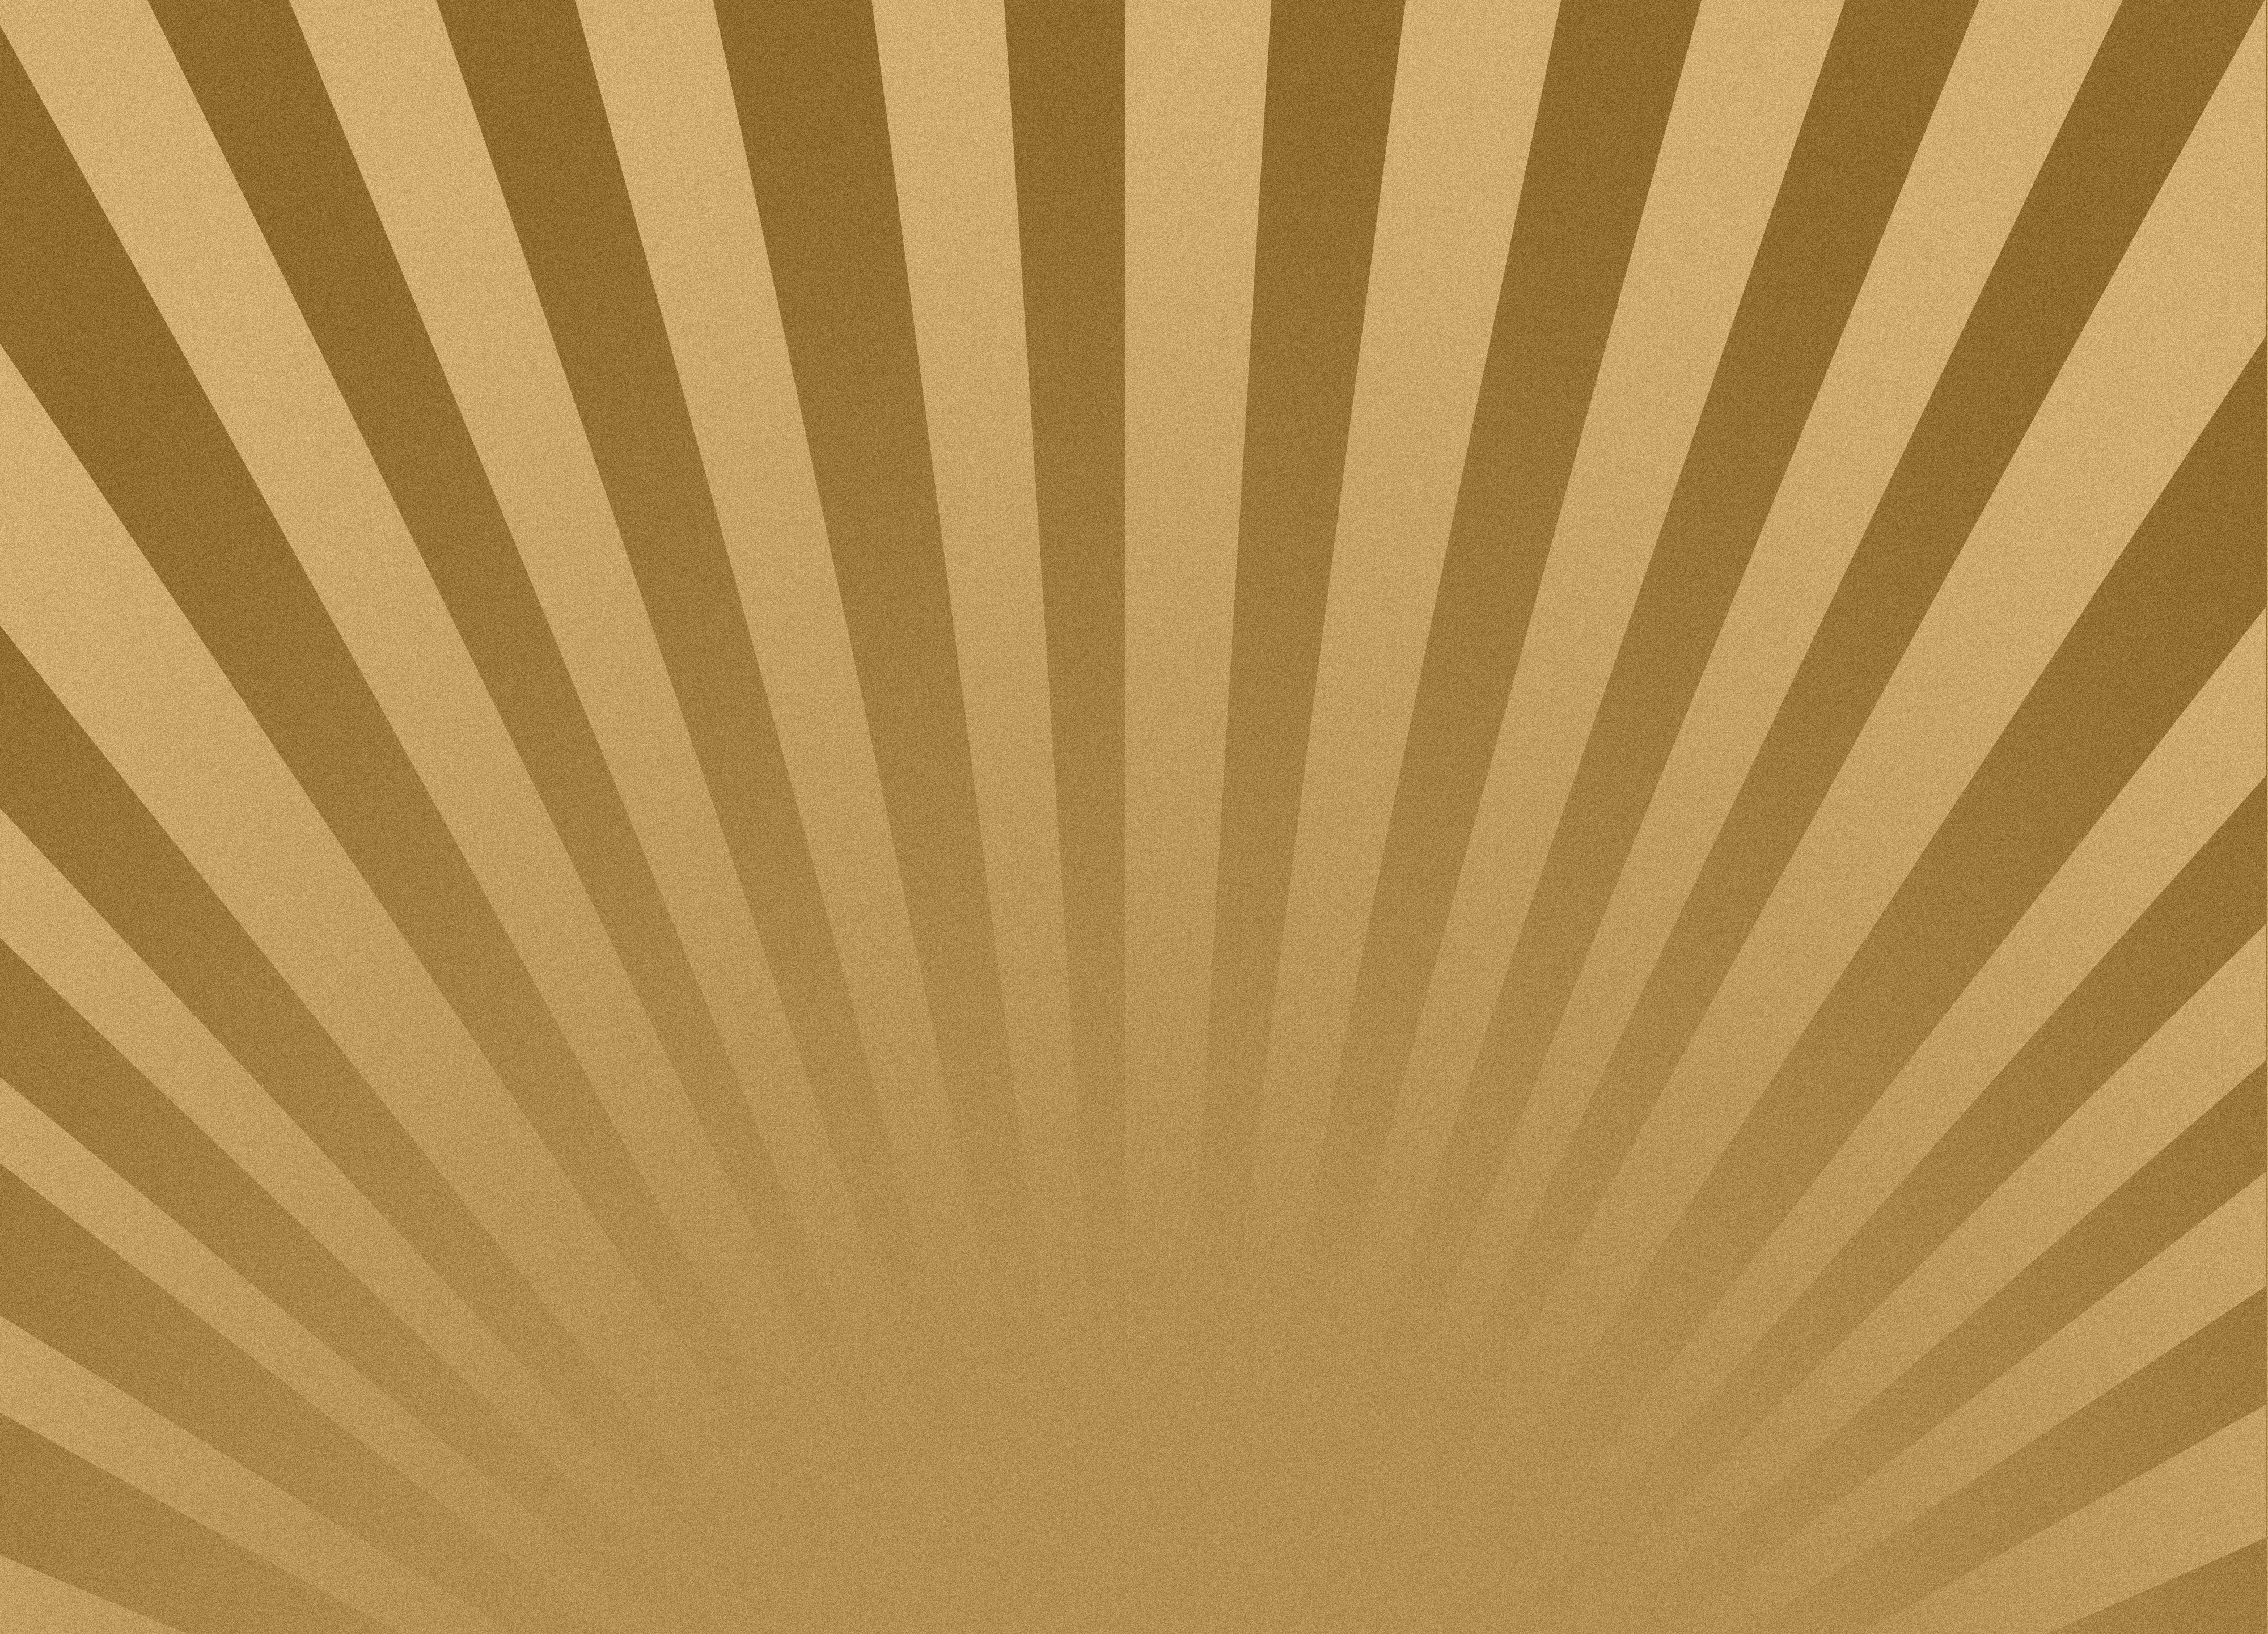 fanlight sunburst grain | Free backgrounds and textures | Cr103.com